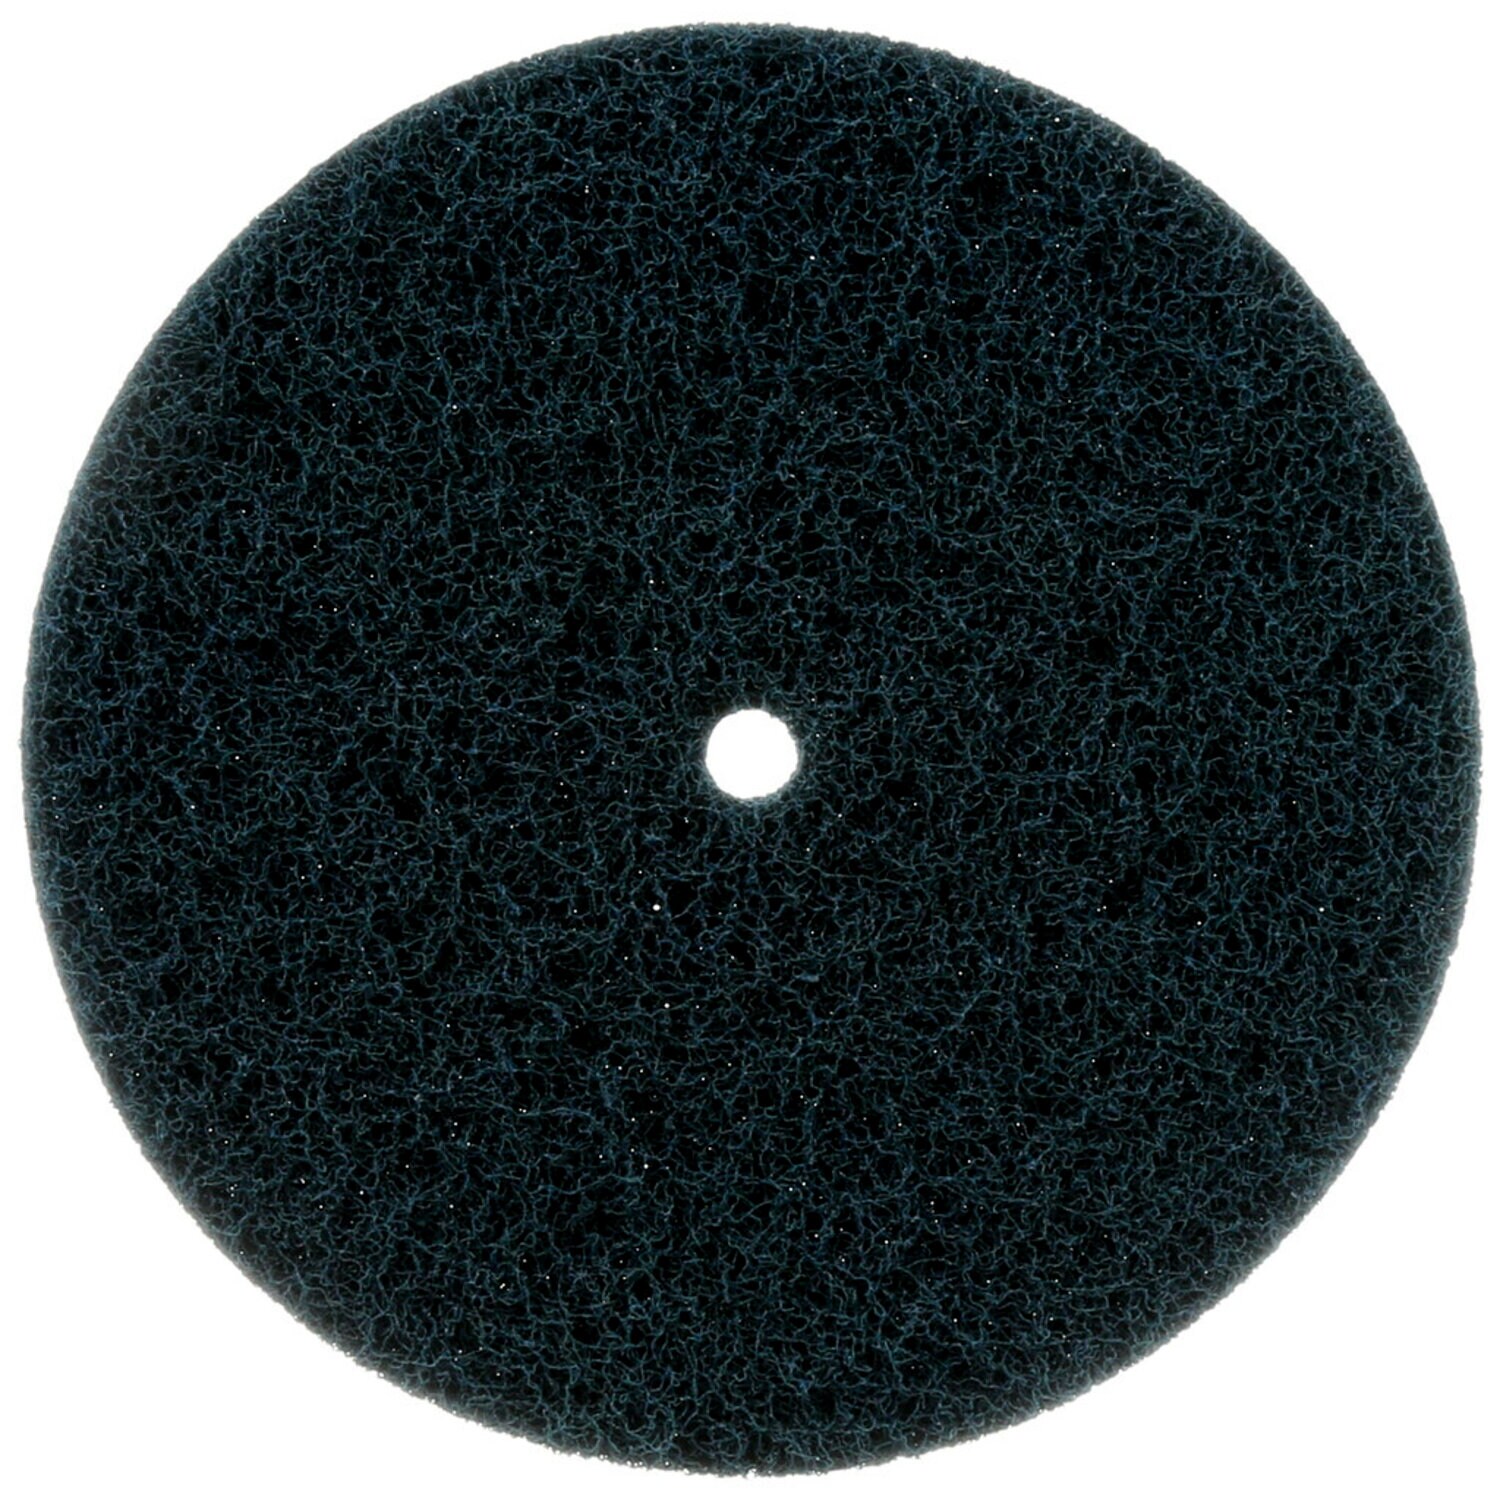 7010368544 - Standard Abrasives Buff and Blend HS Disc, 814001, 16 in x 1-1/4 in A
MED, 5 ea/Case